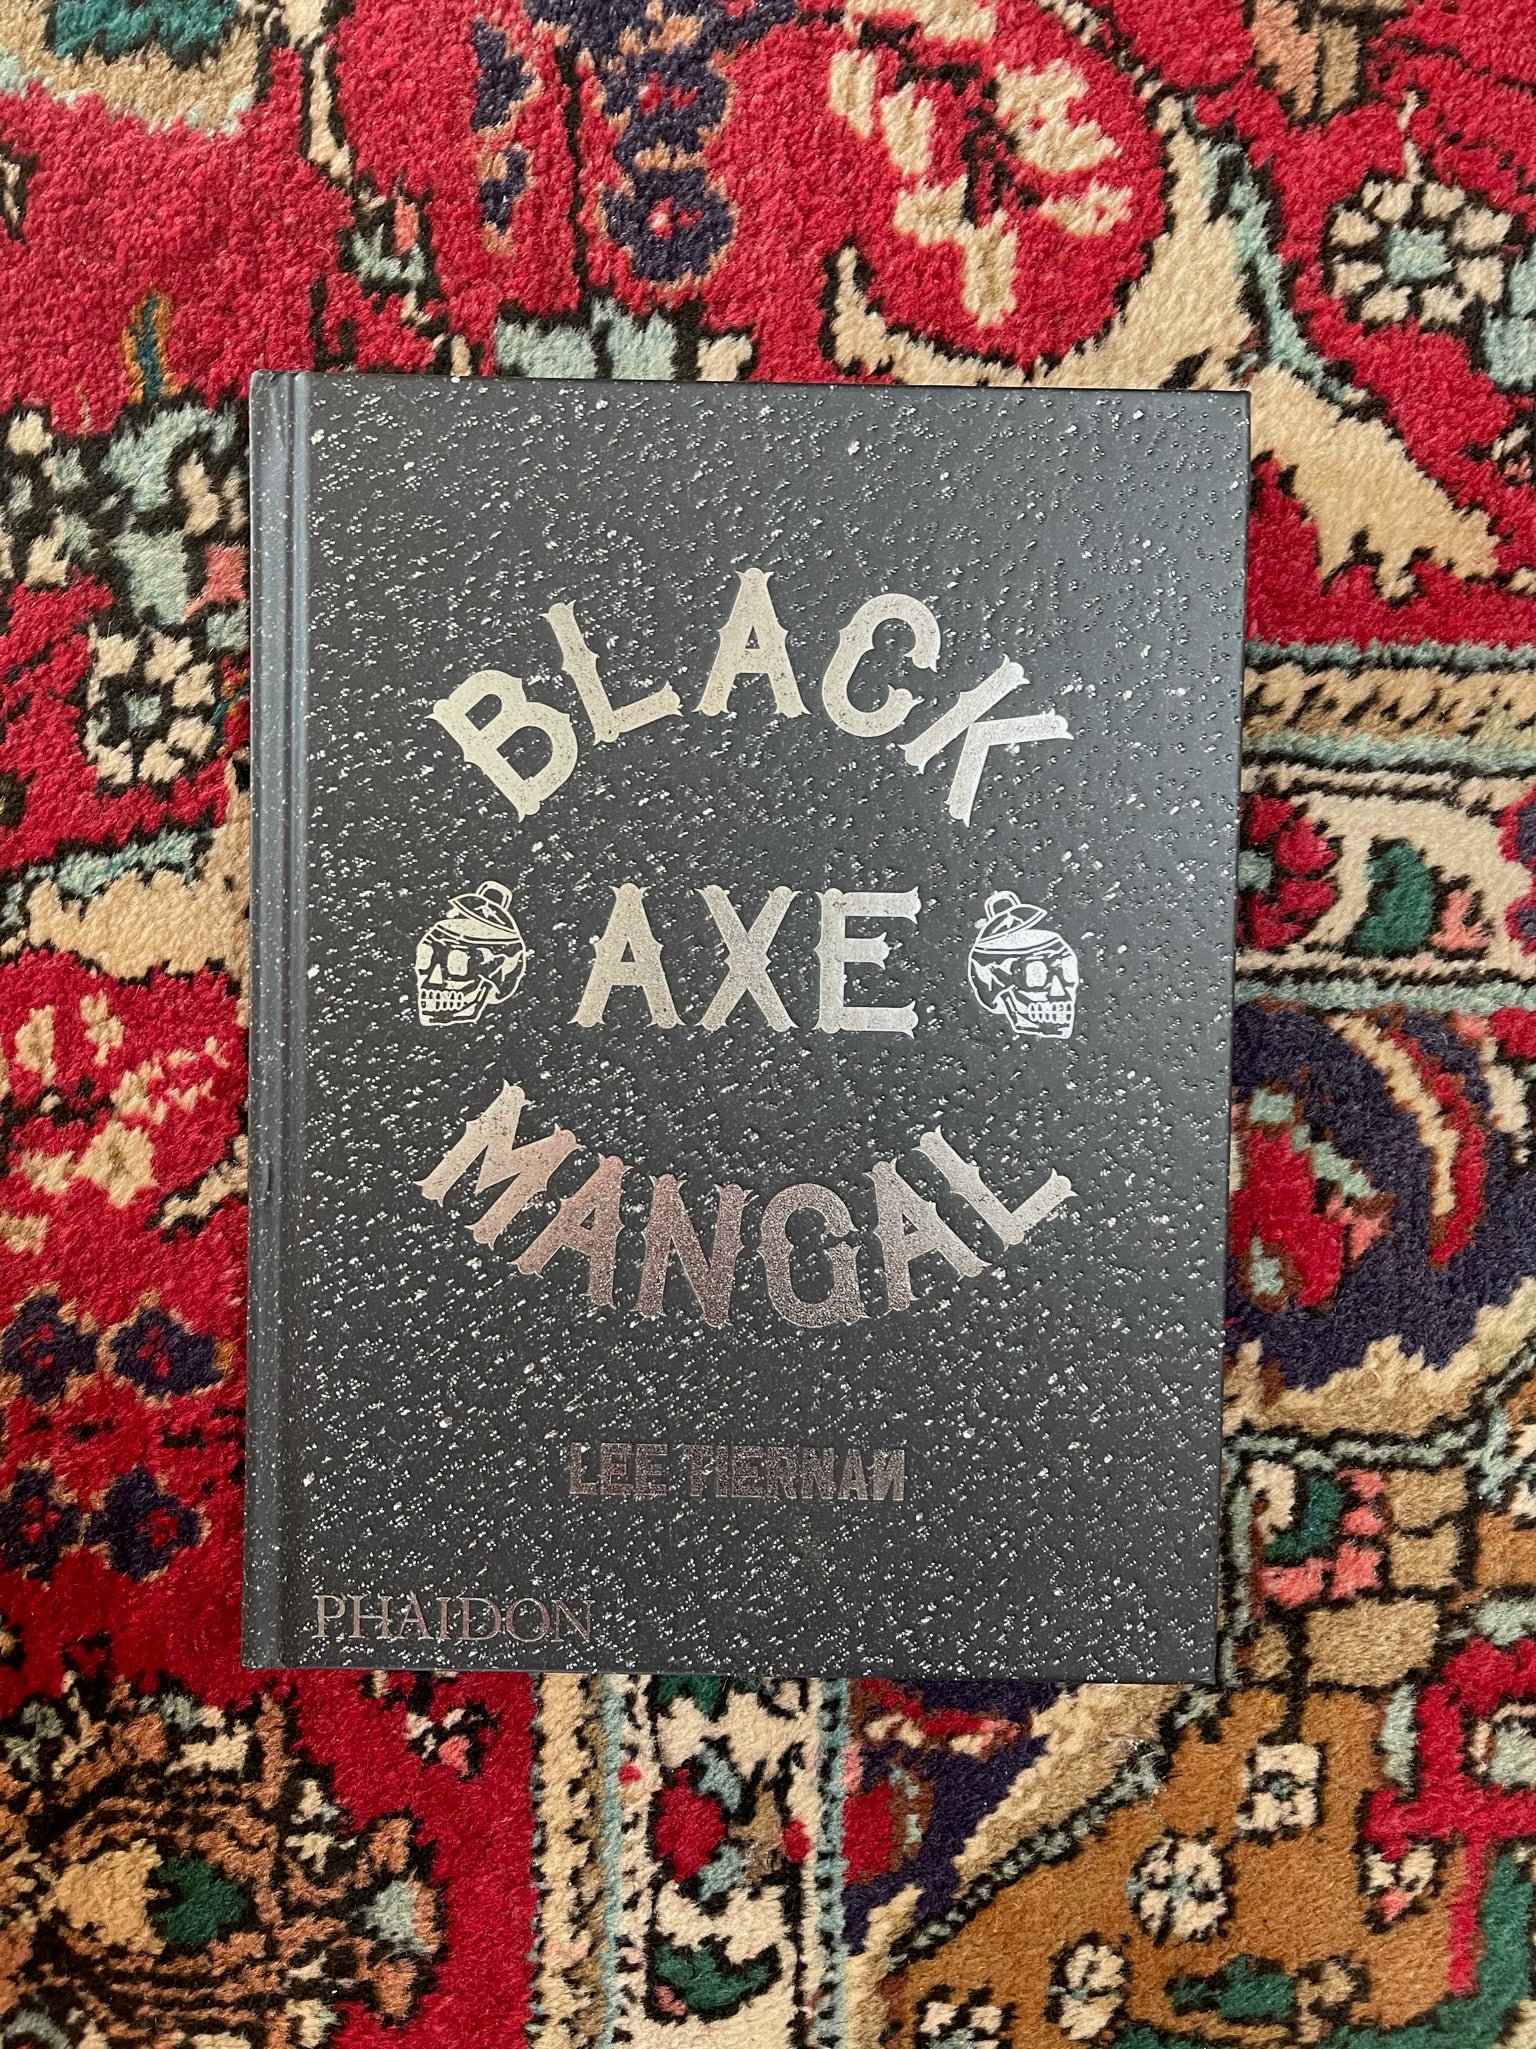 Black Axe Mangal Cook Book